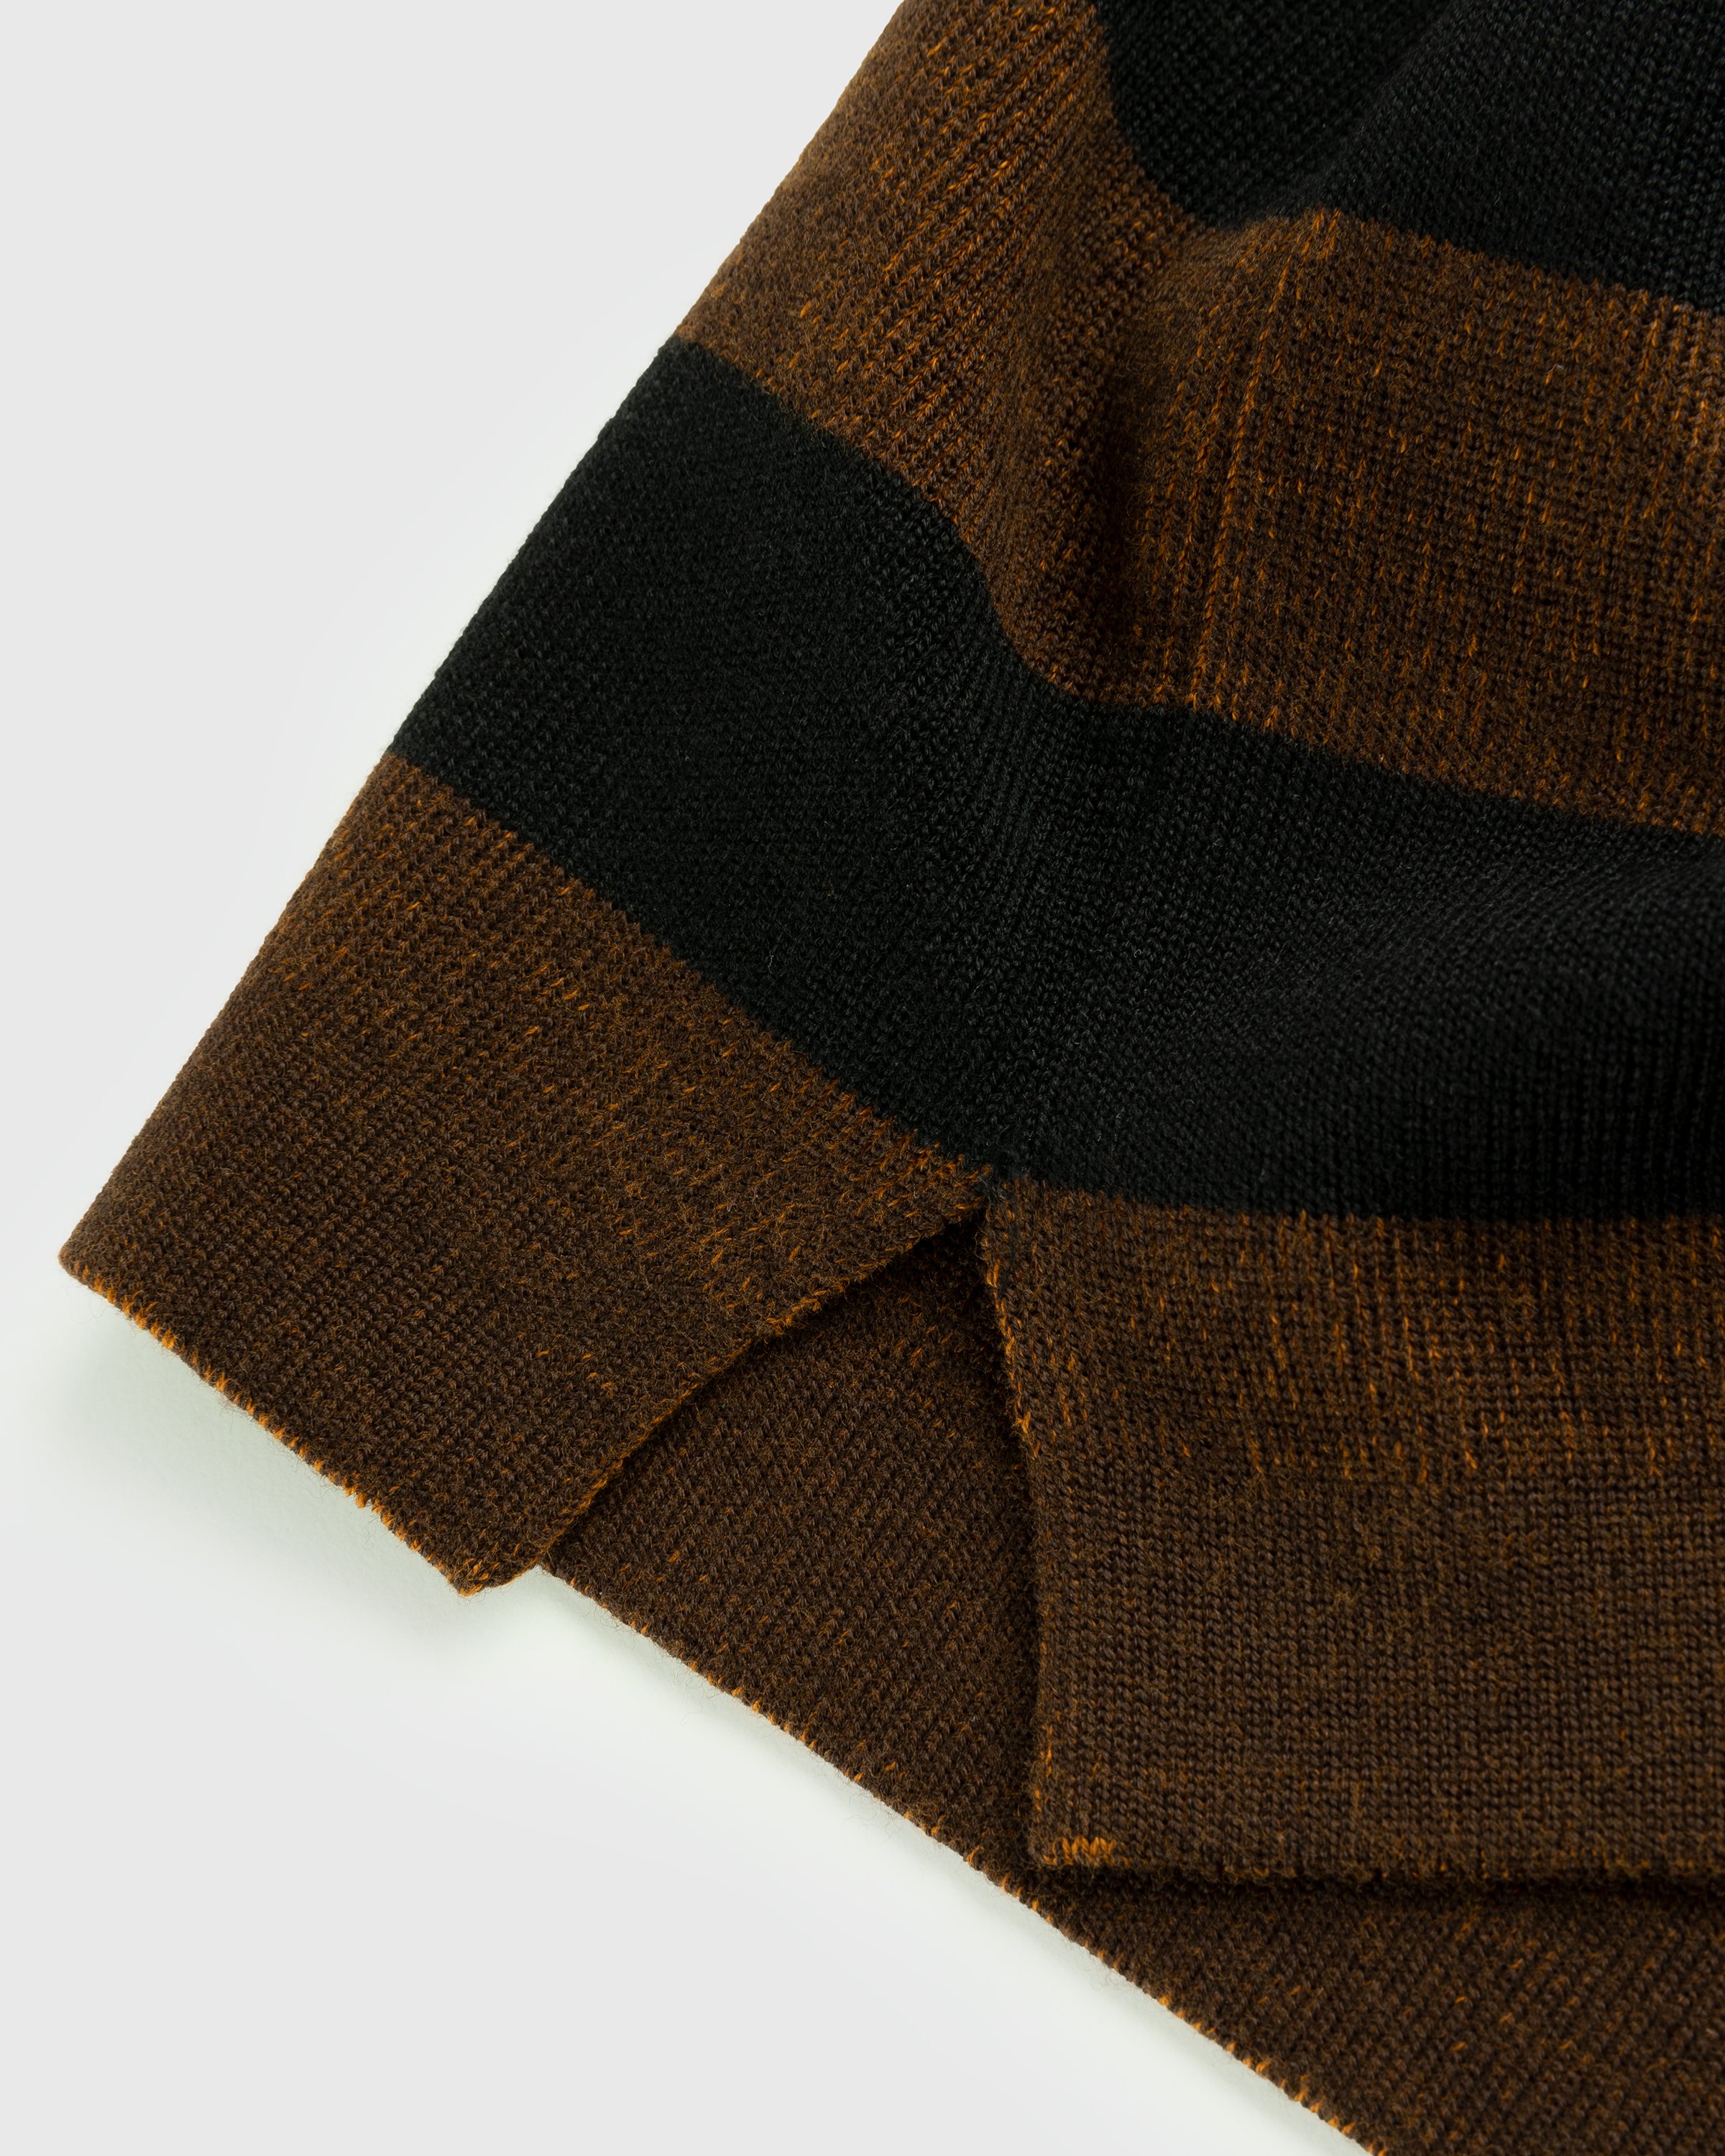 Kenzo - Striped Merino Wool Polo Dark Camel - Clothing - Brown - Image 3